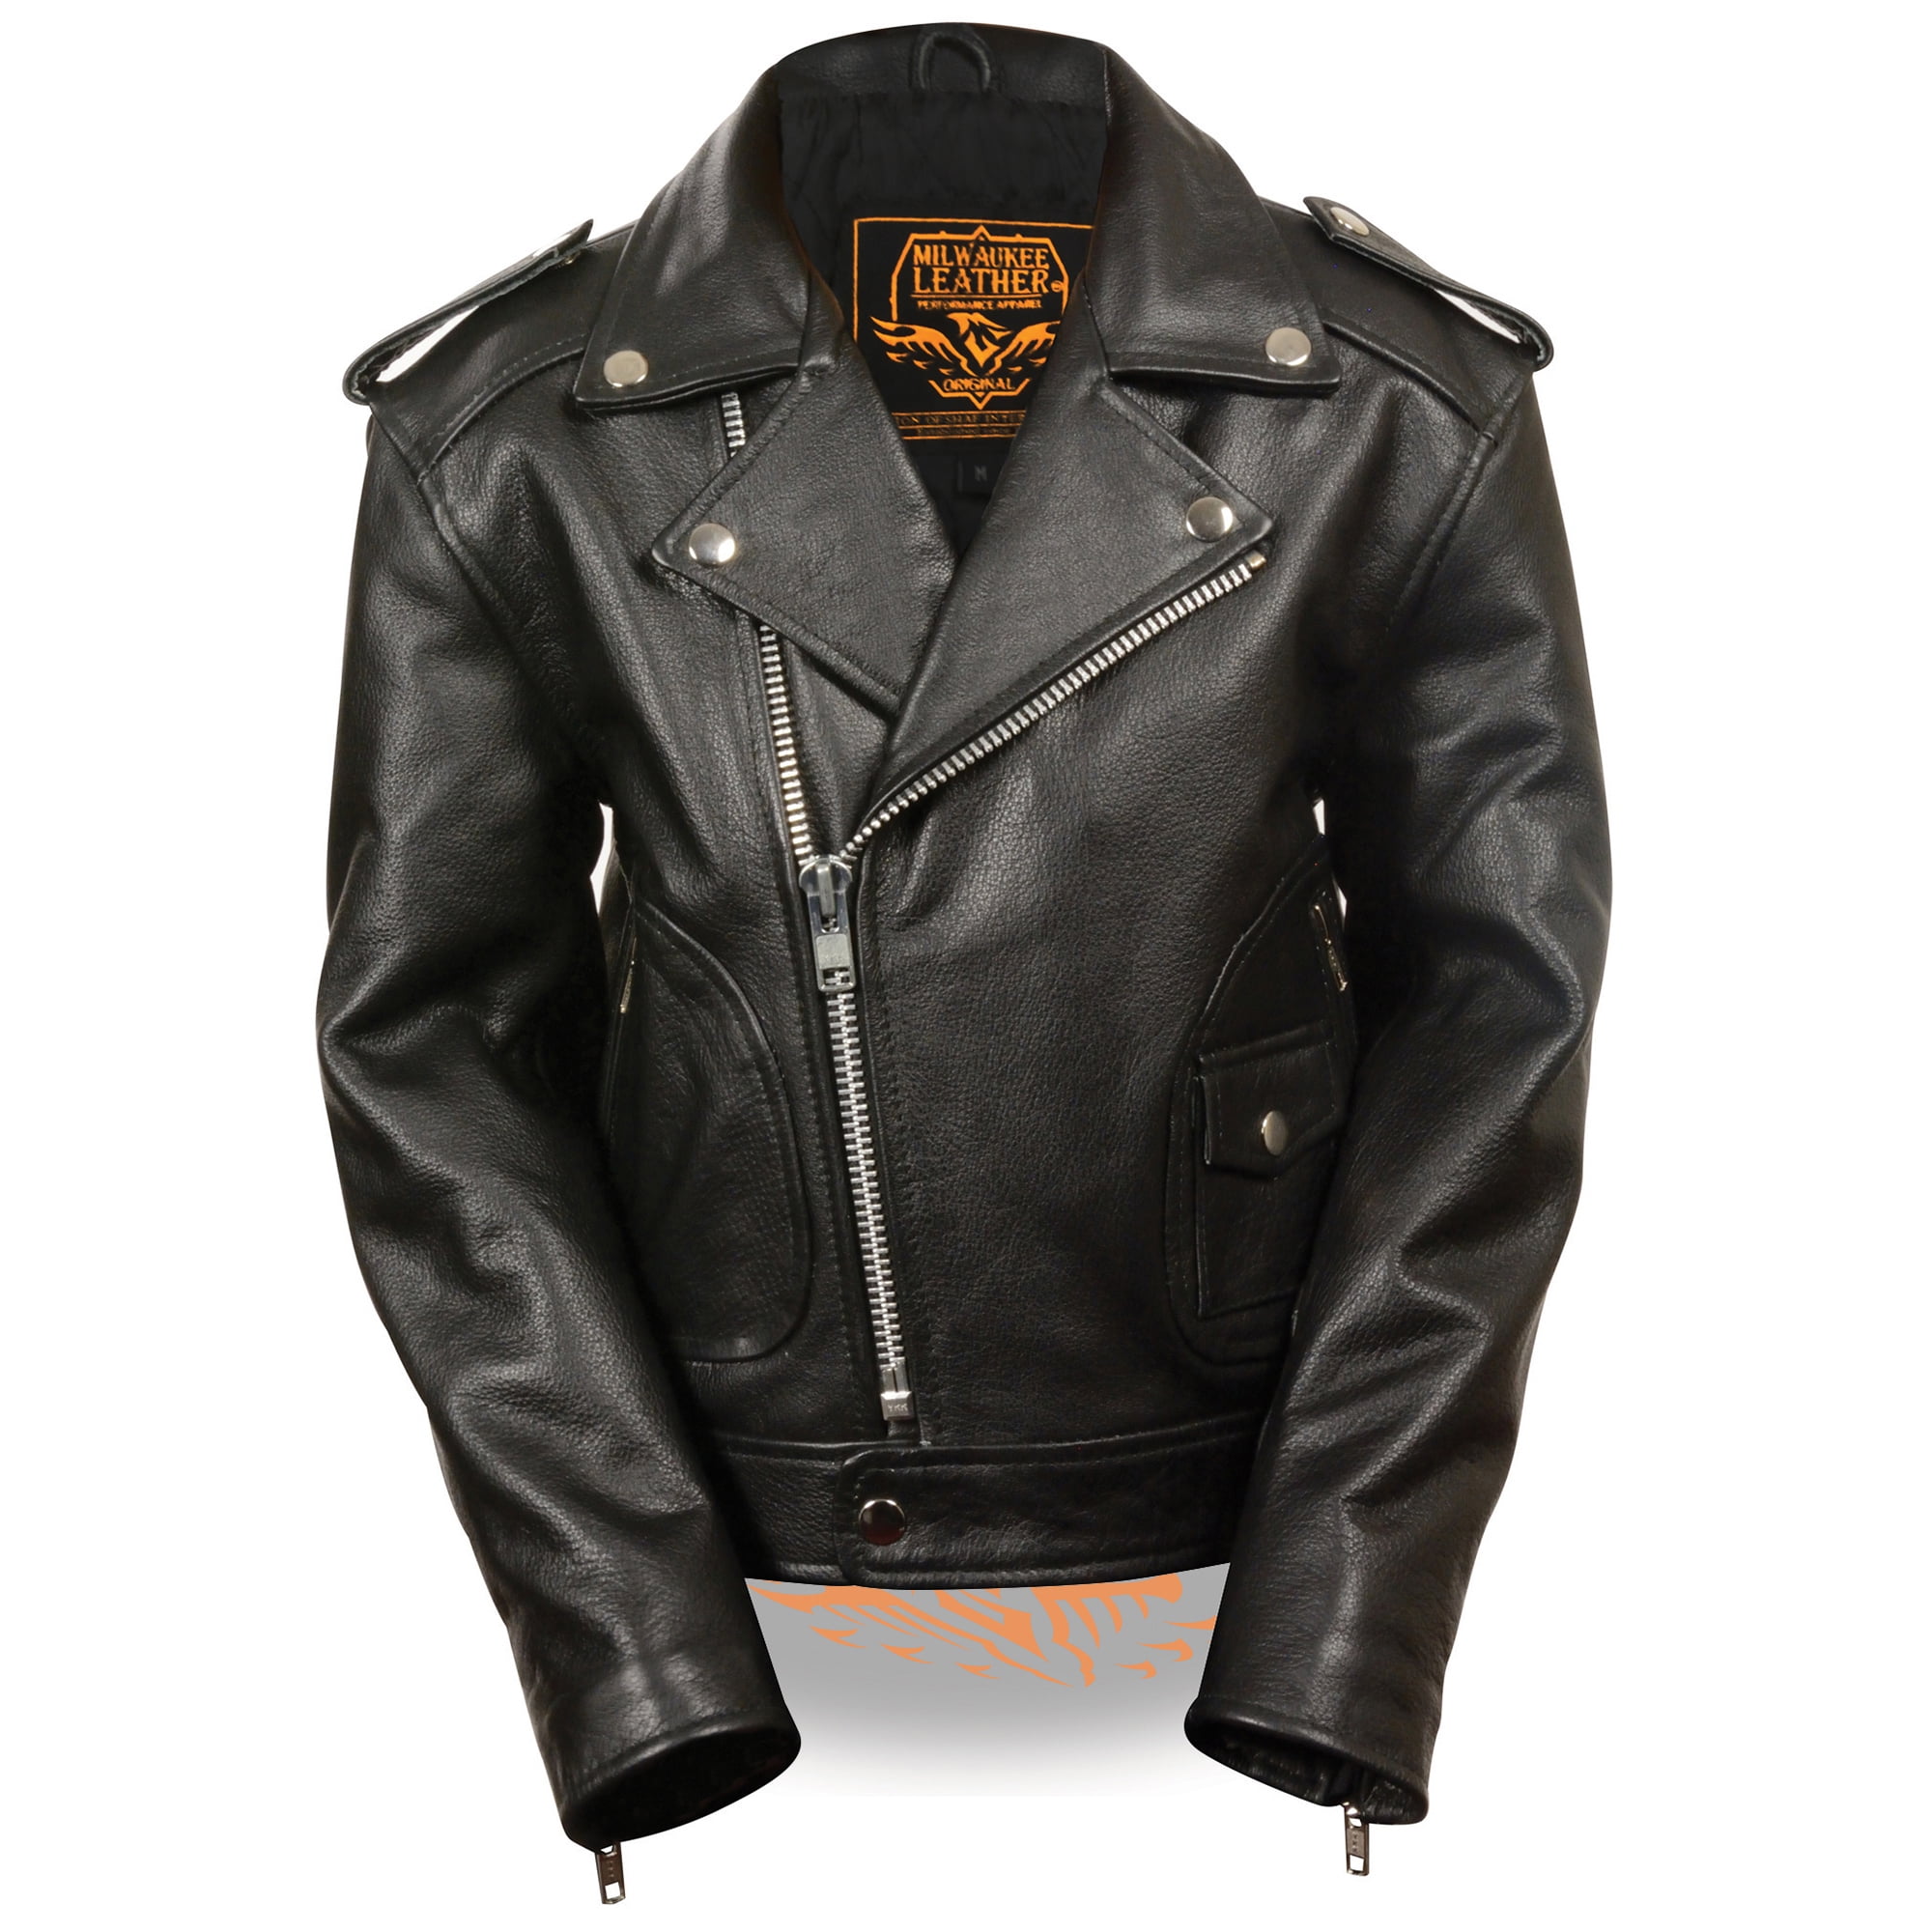 Kids Updated Black Leather Motorcycle Jacket